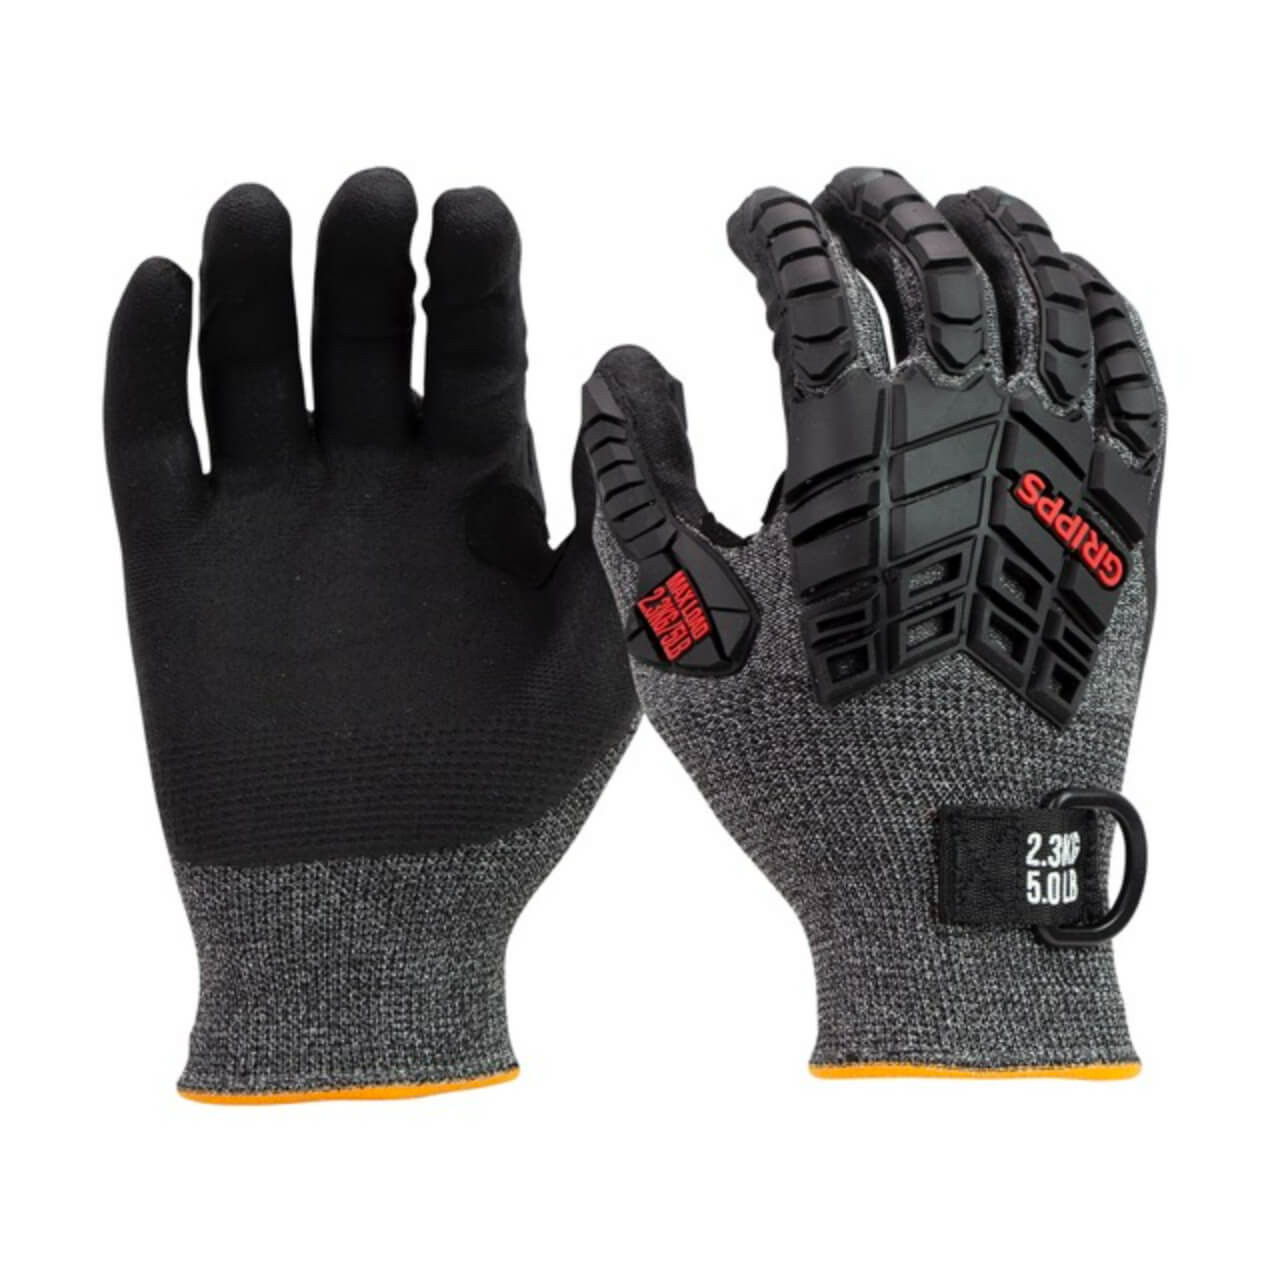 GRIPPS C5 FlexiLite Impact MKII Gloves 2.3kg Max Load